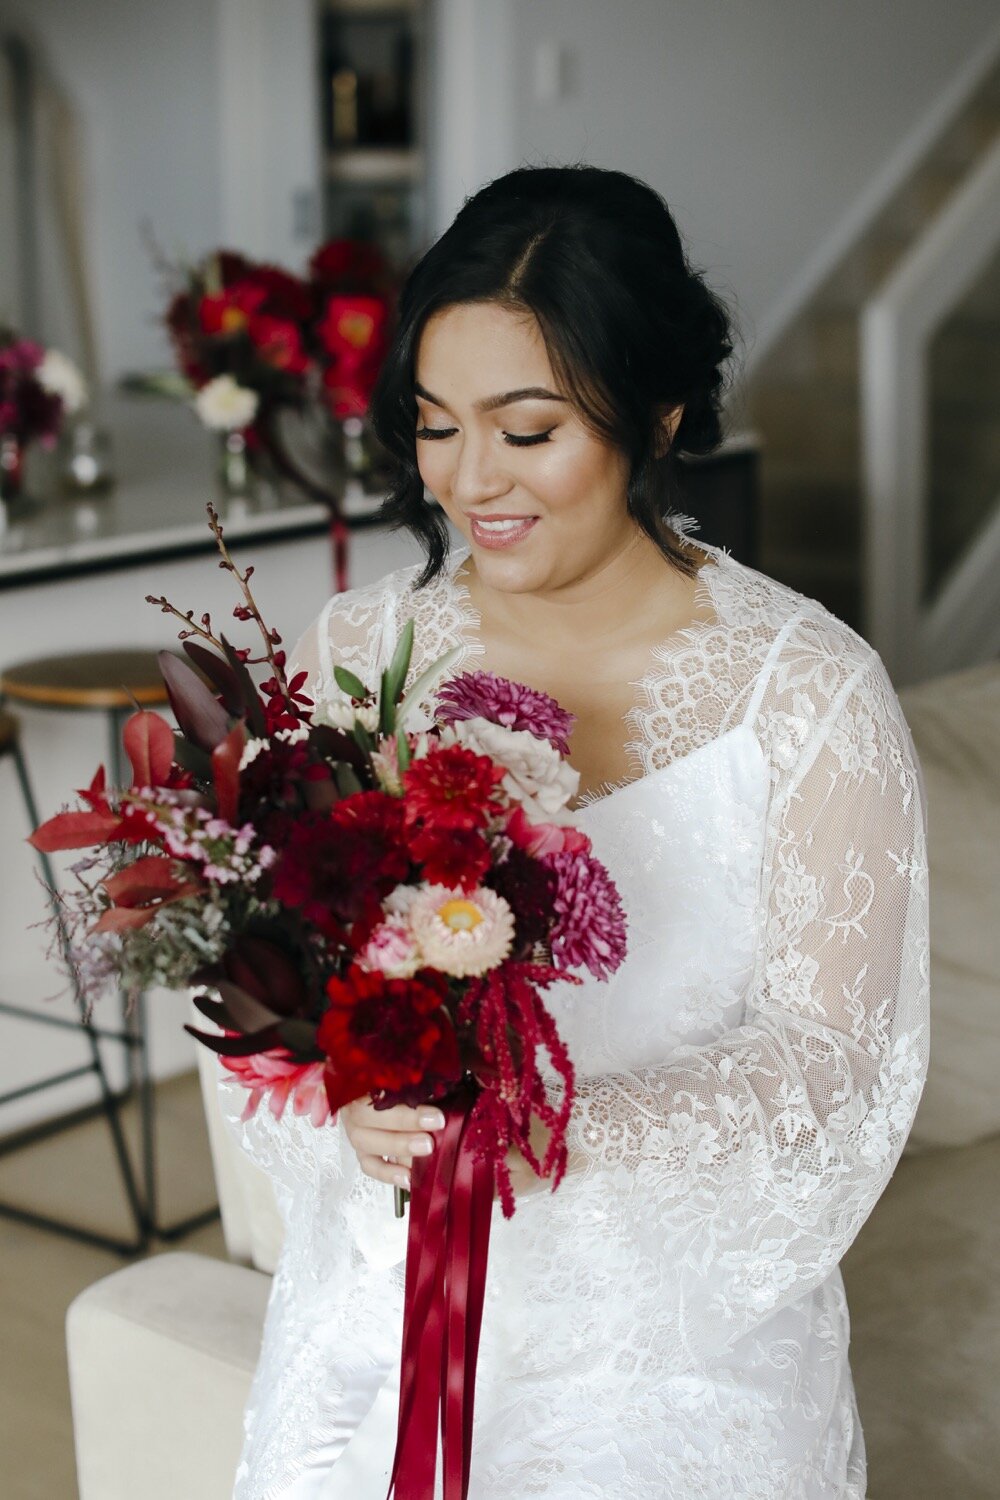 sydney bride with wedding bouquet flowers 